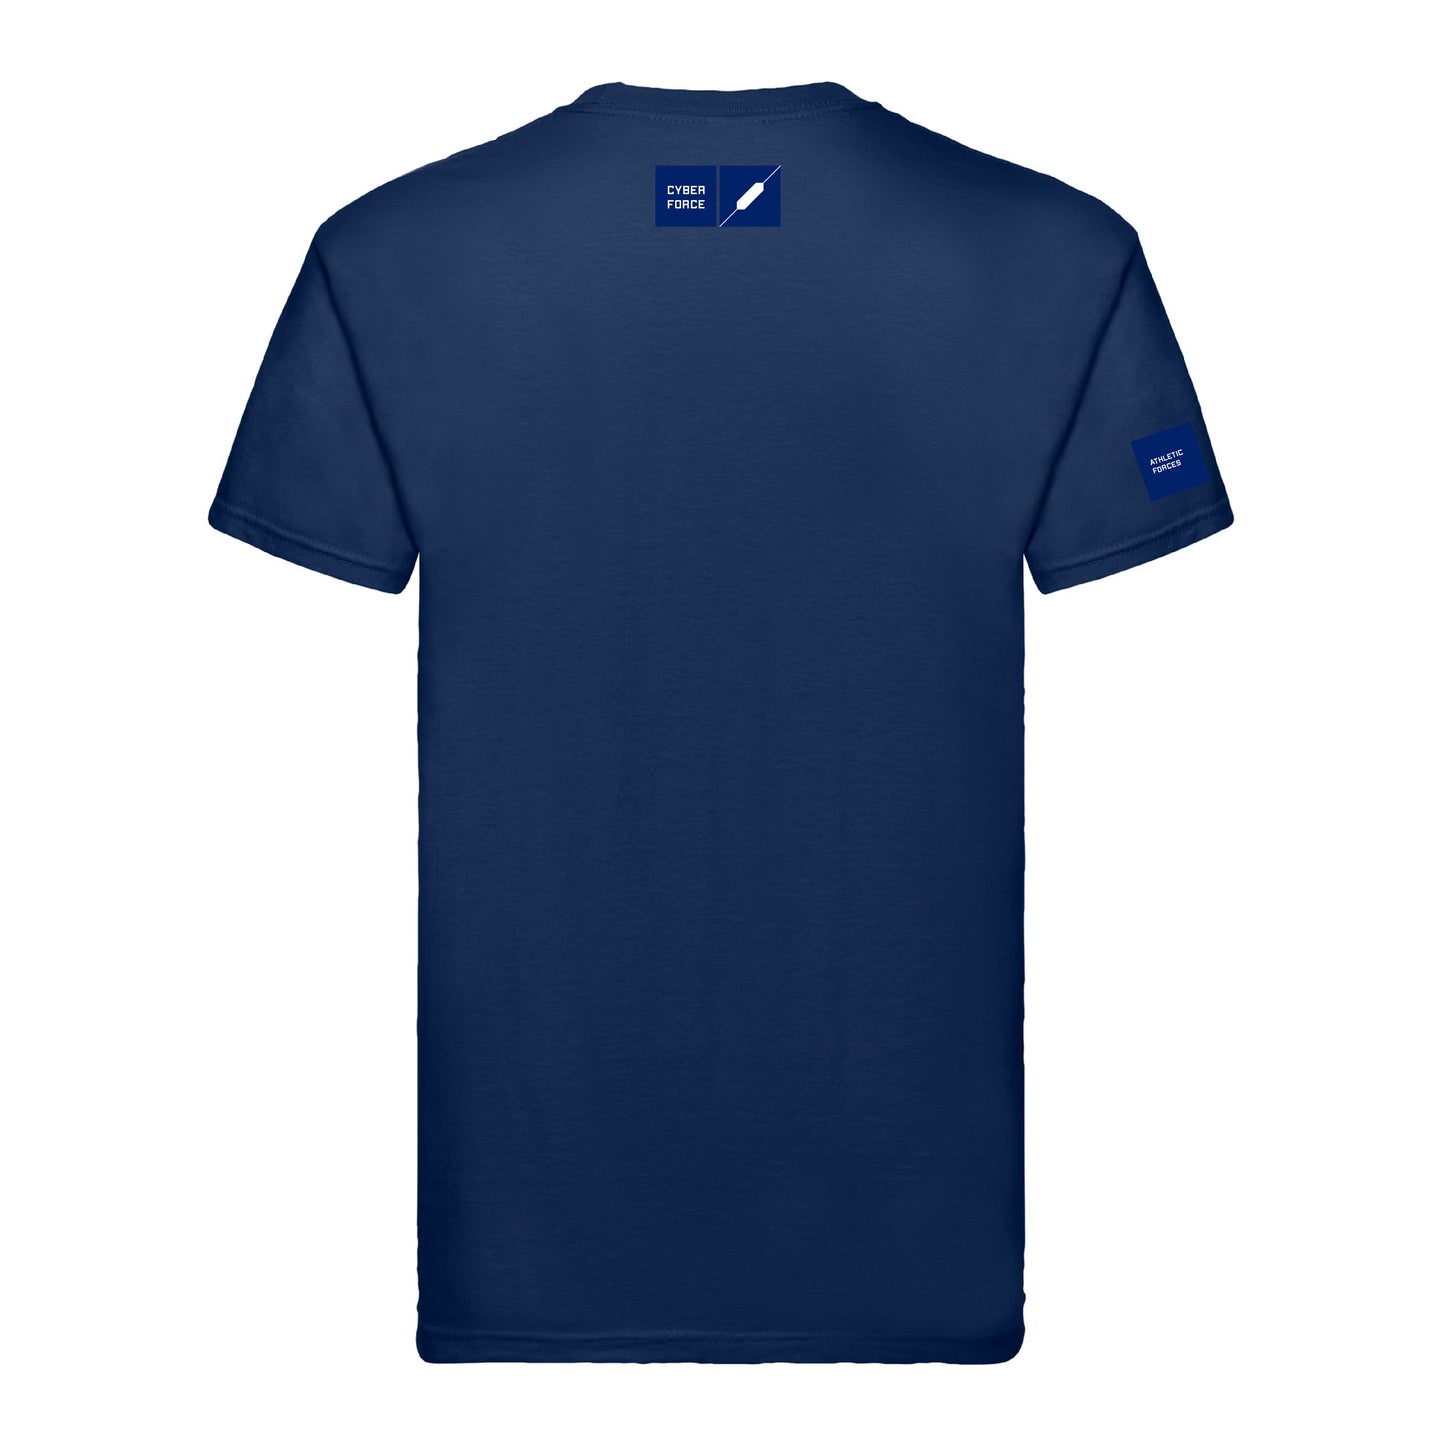 Cyber Force ® Qubit T-Shirt